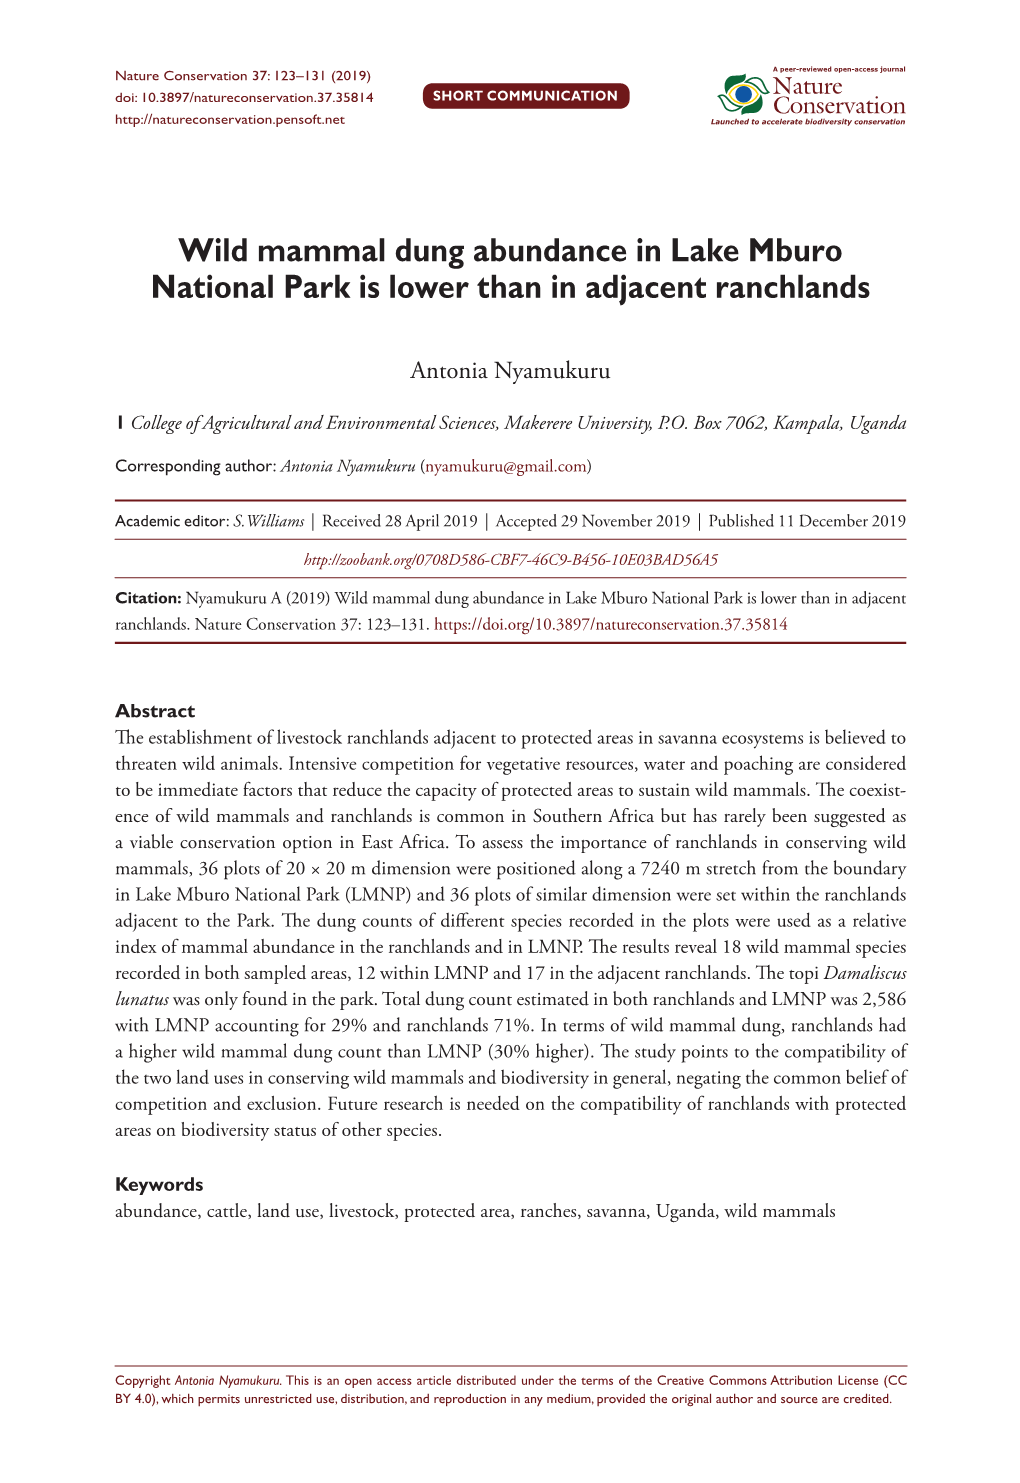 ﻿Wild Mammal Dung Abundance in Lake Mburo National Park Is Lower